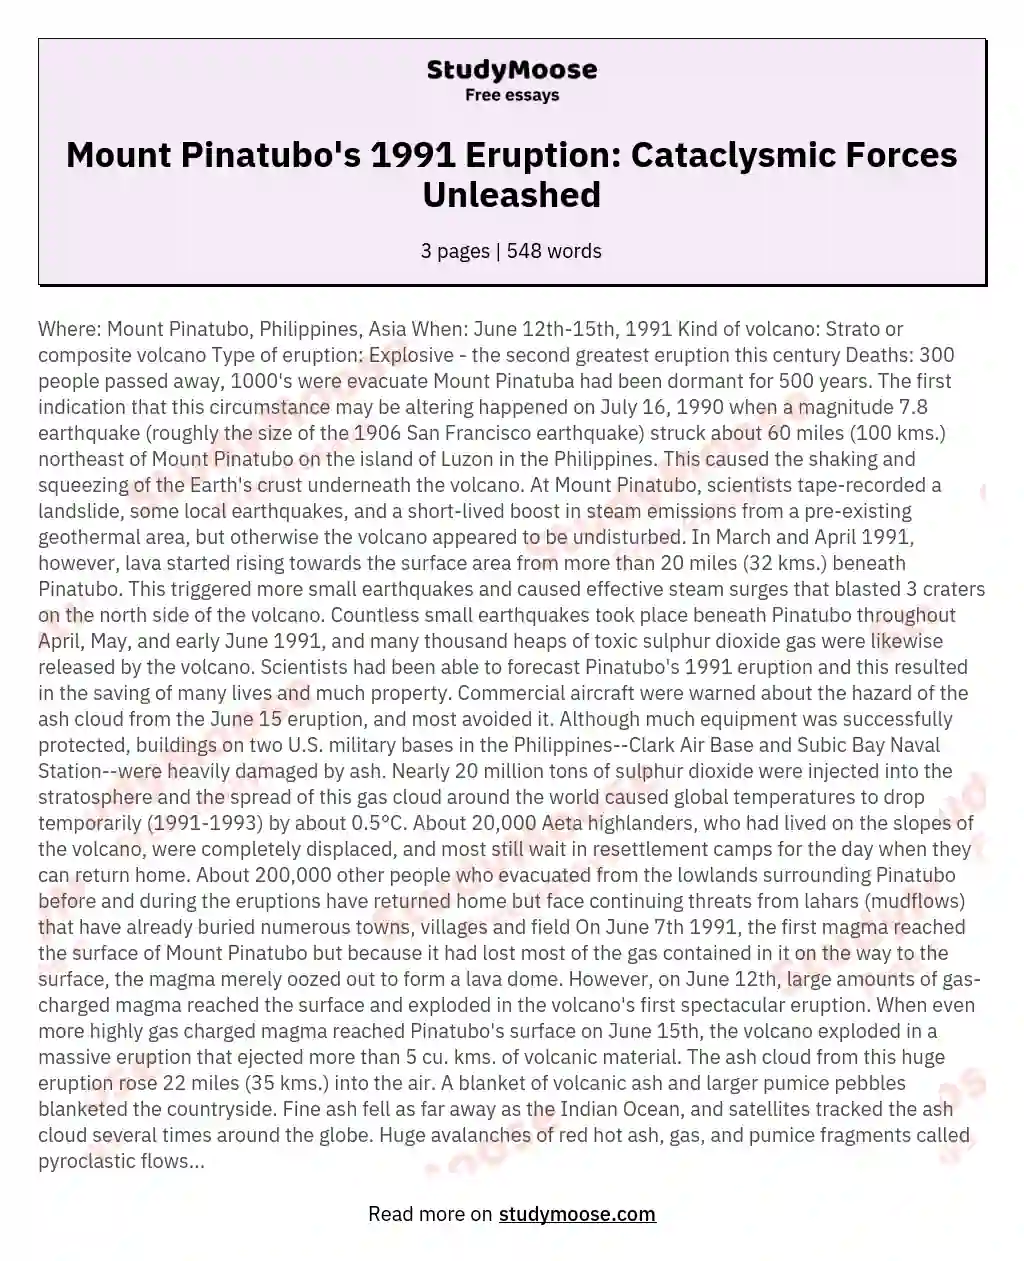 Mount Pinatubo's 1991 Eruption: Cataclysmic Forces Unleashed essay